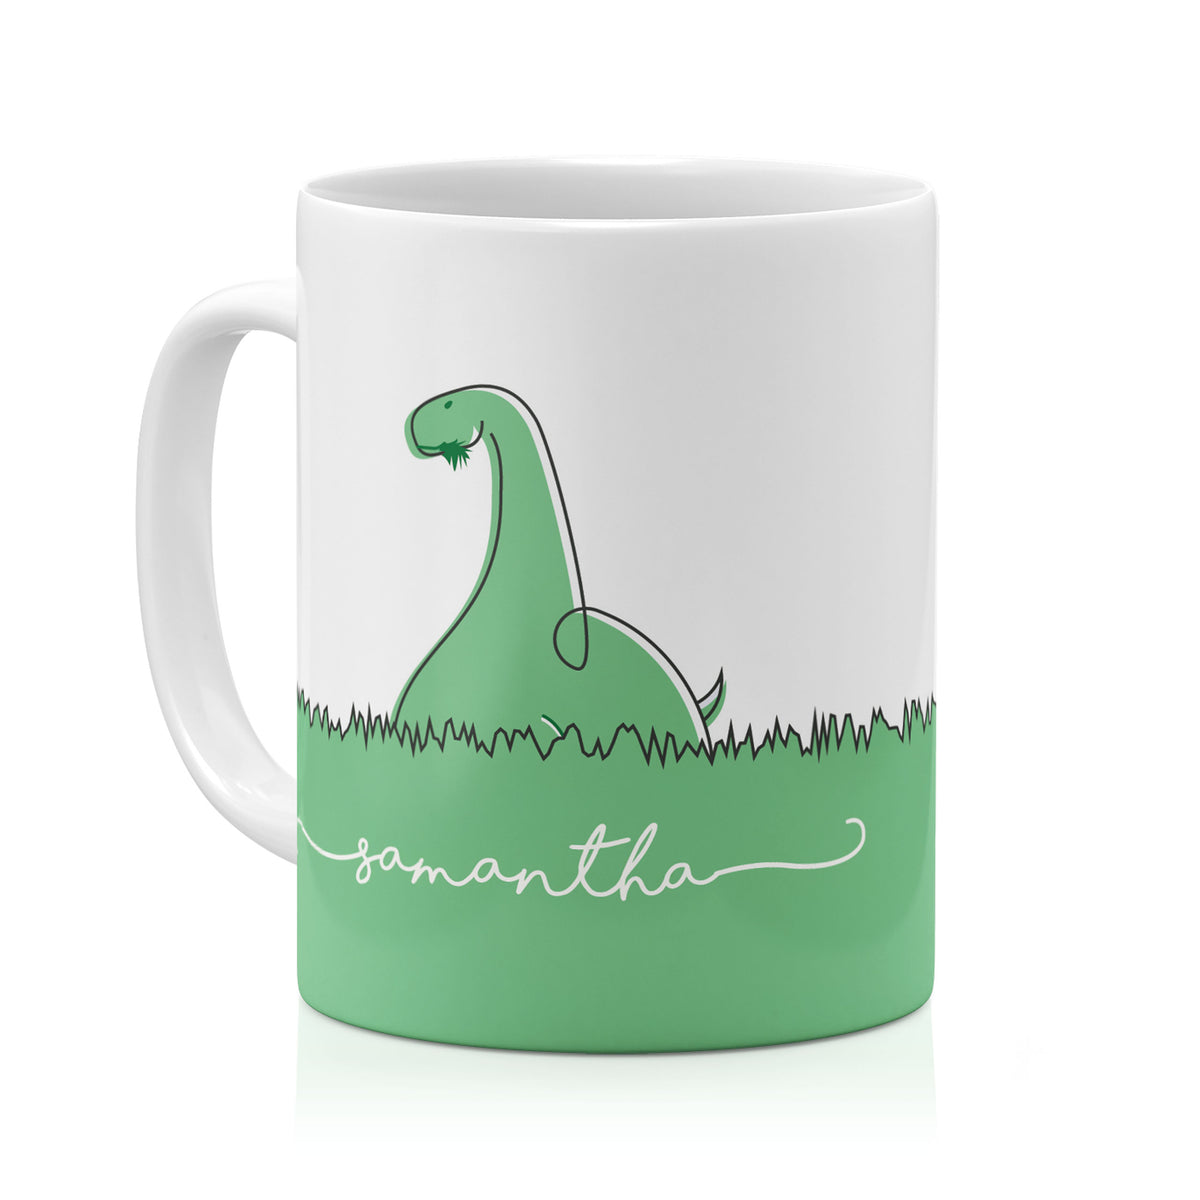 Personalised Ceramic Mug with Name Initials Text Green Veggie Dino